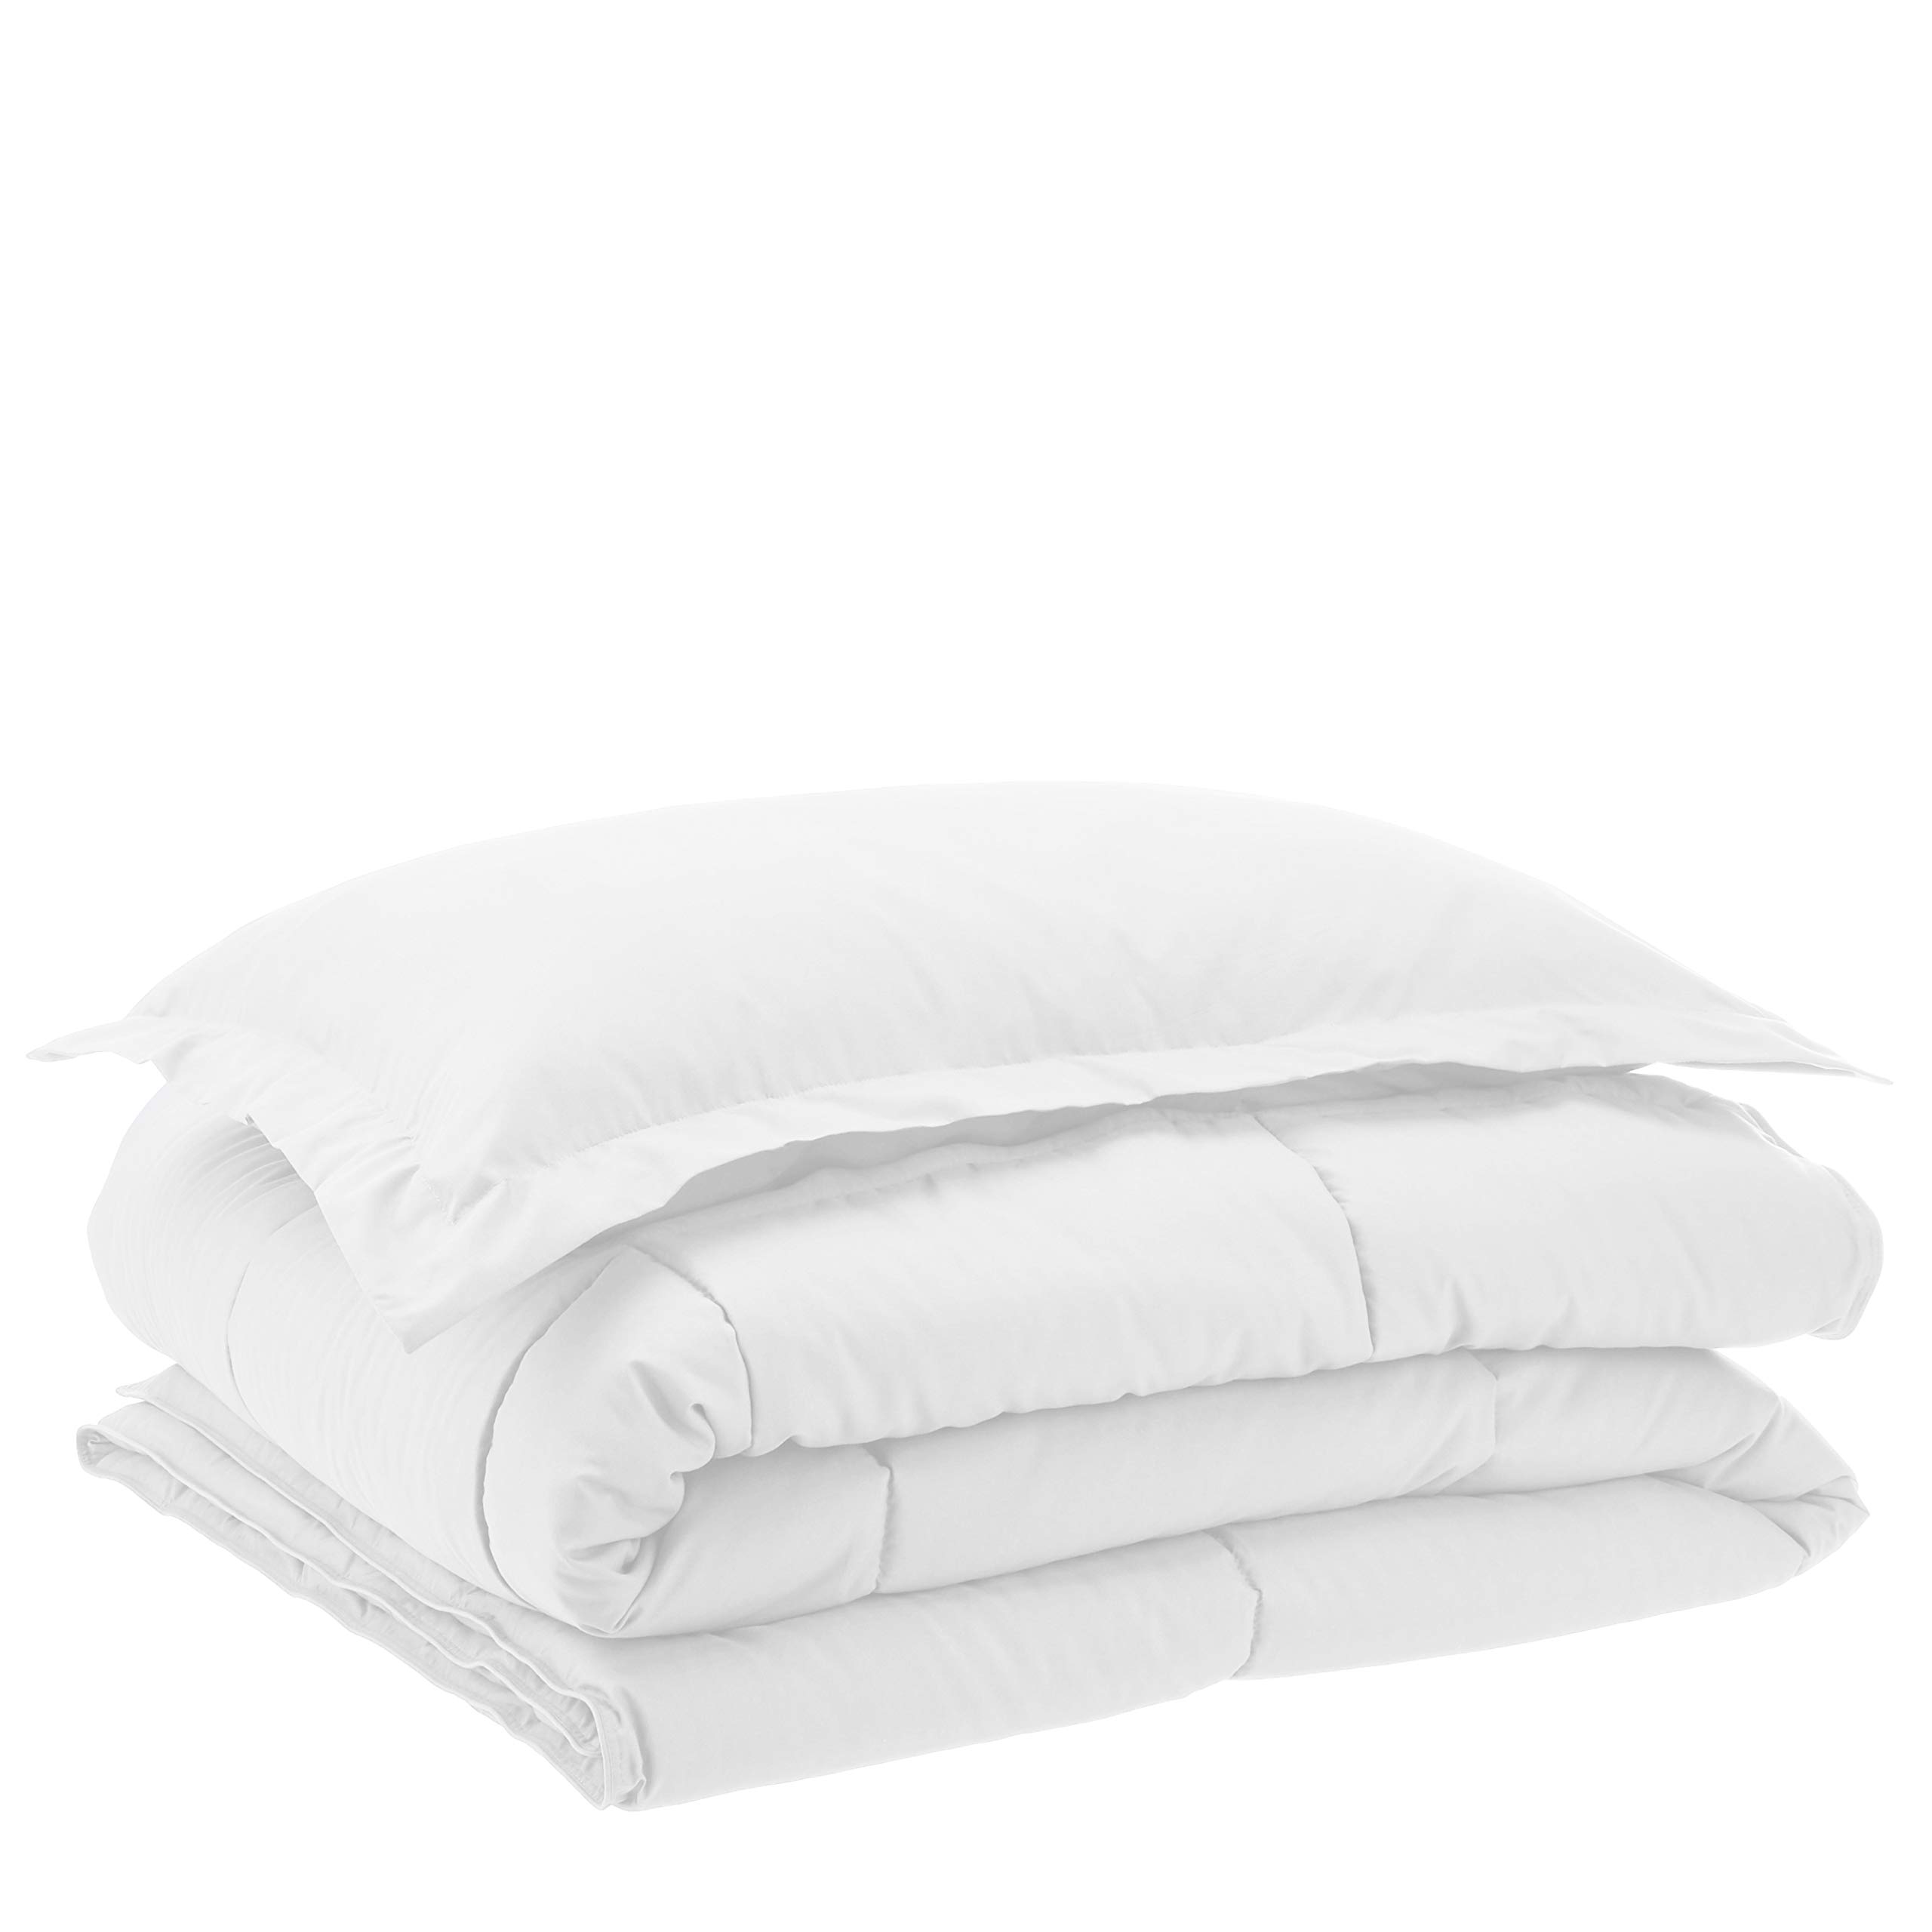 Book Cover Amazon Basics Down-Alternative Comforter Bedding Set with Pillow Sham - Twin, White